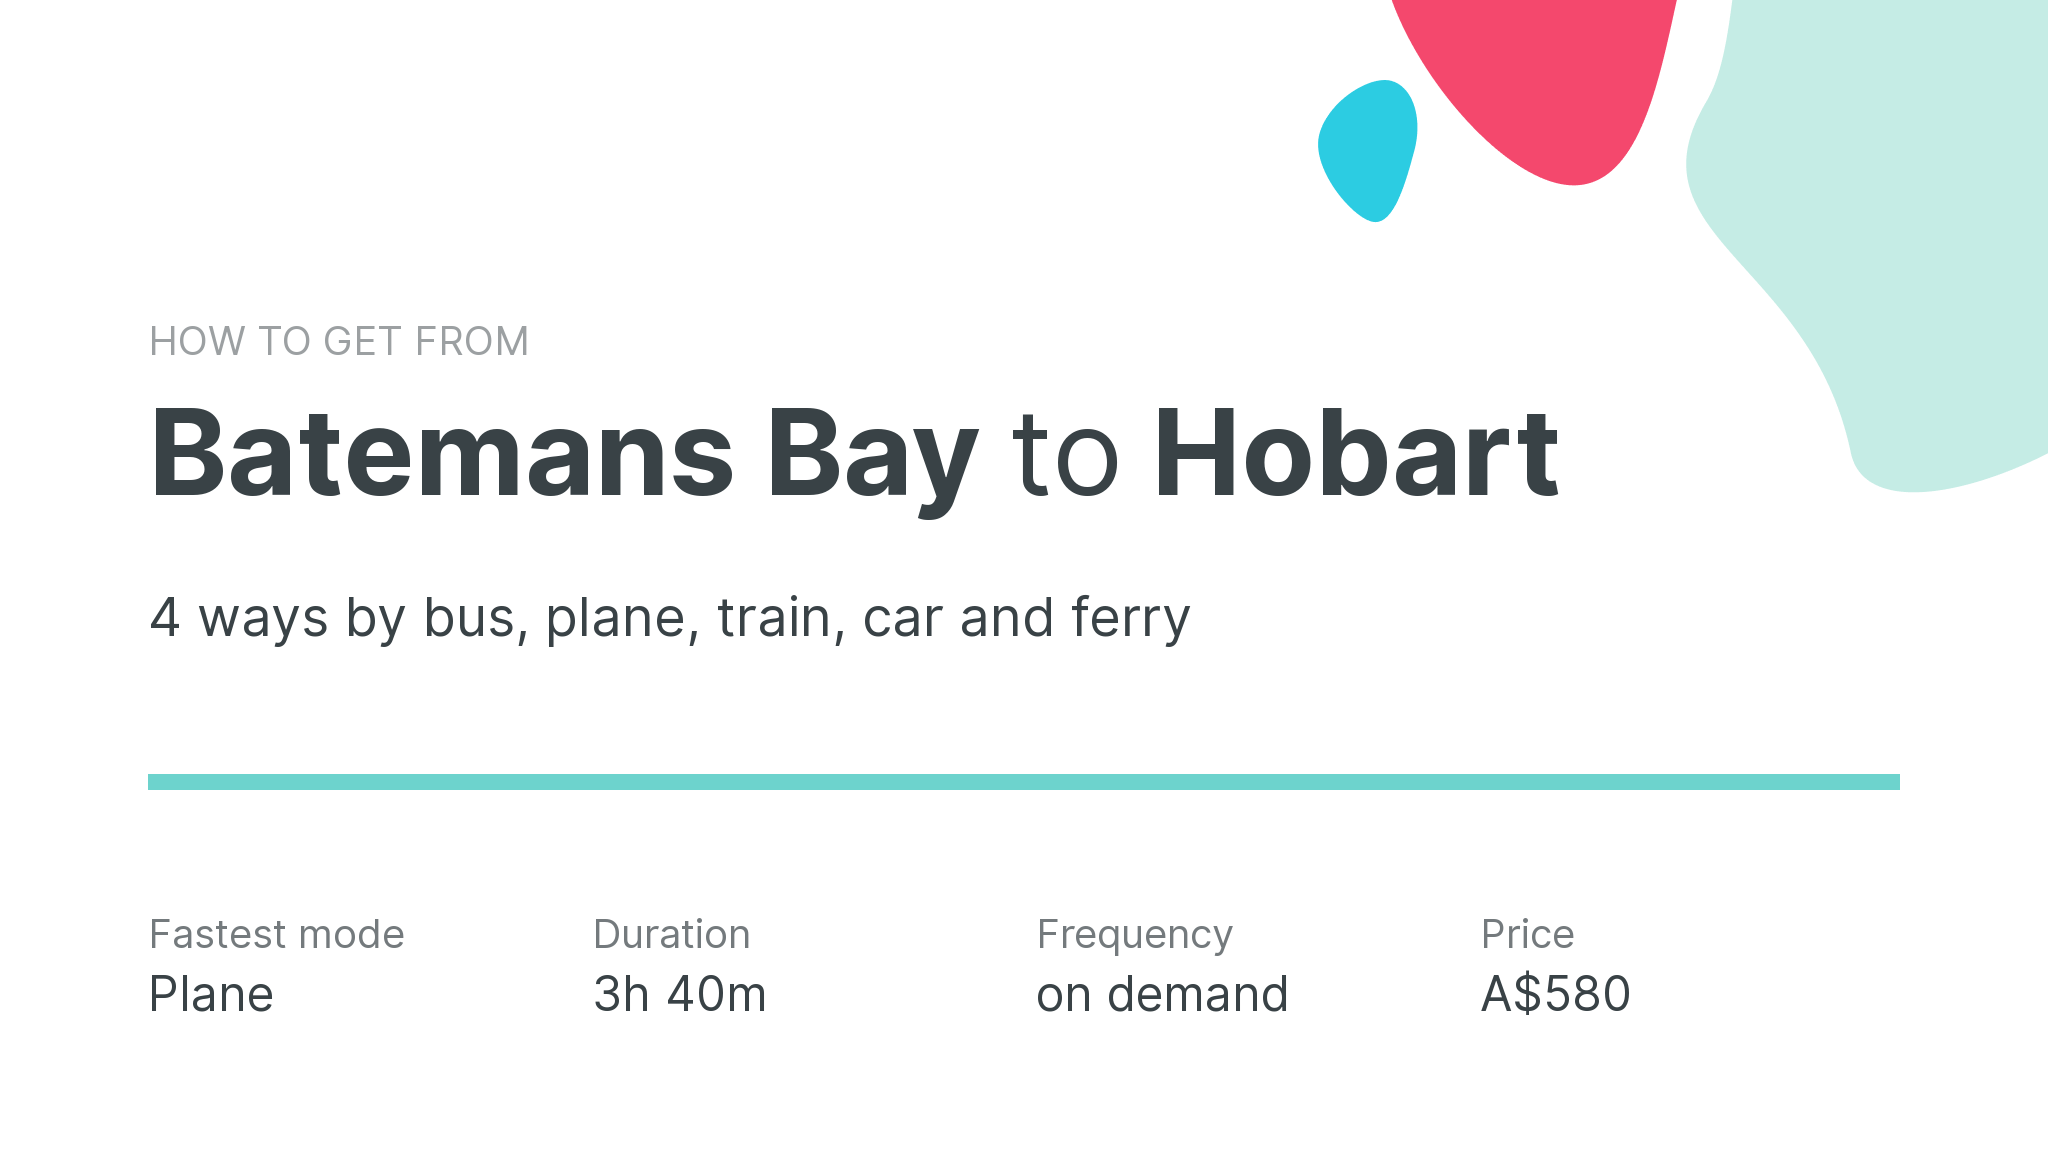 How do I get from Batemans Bay to Hobart